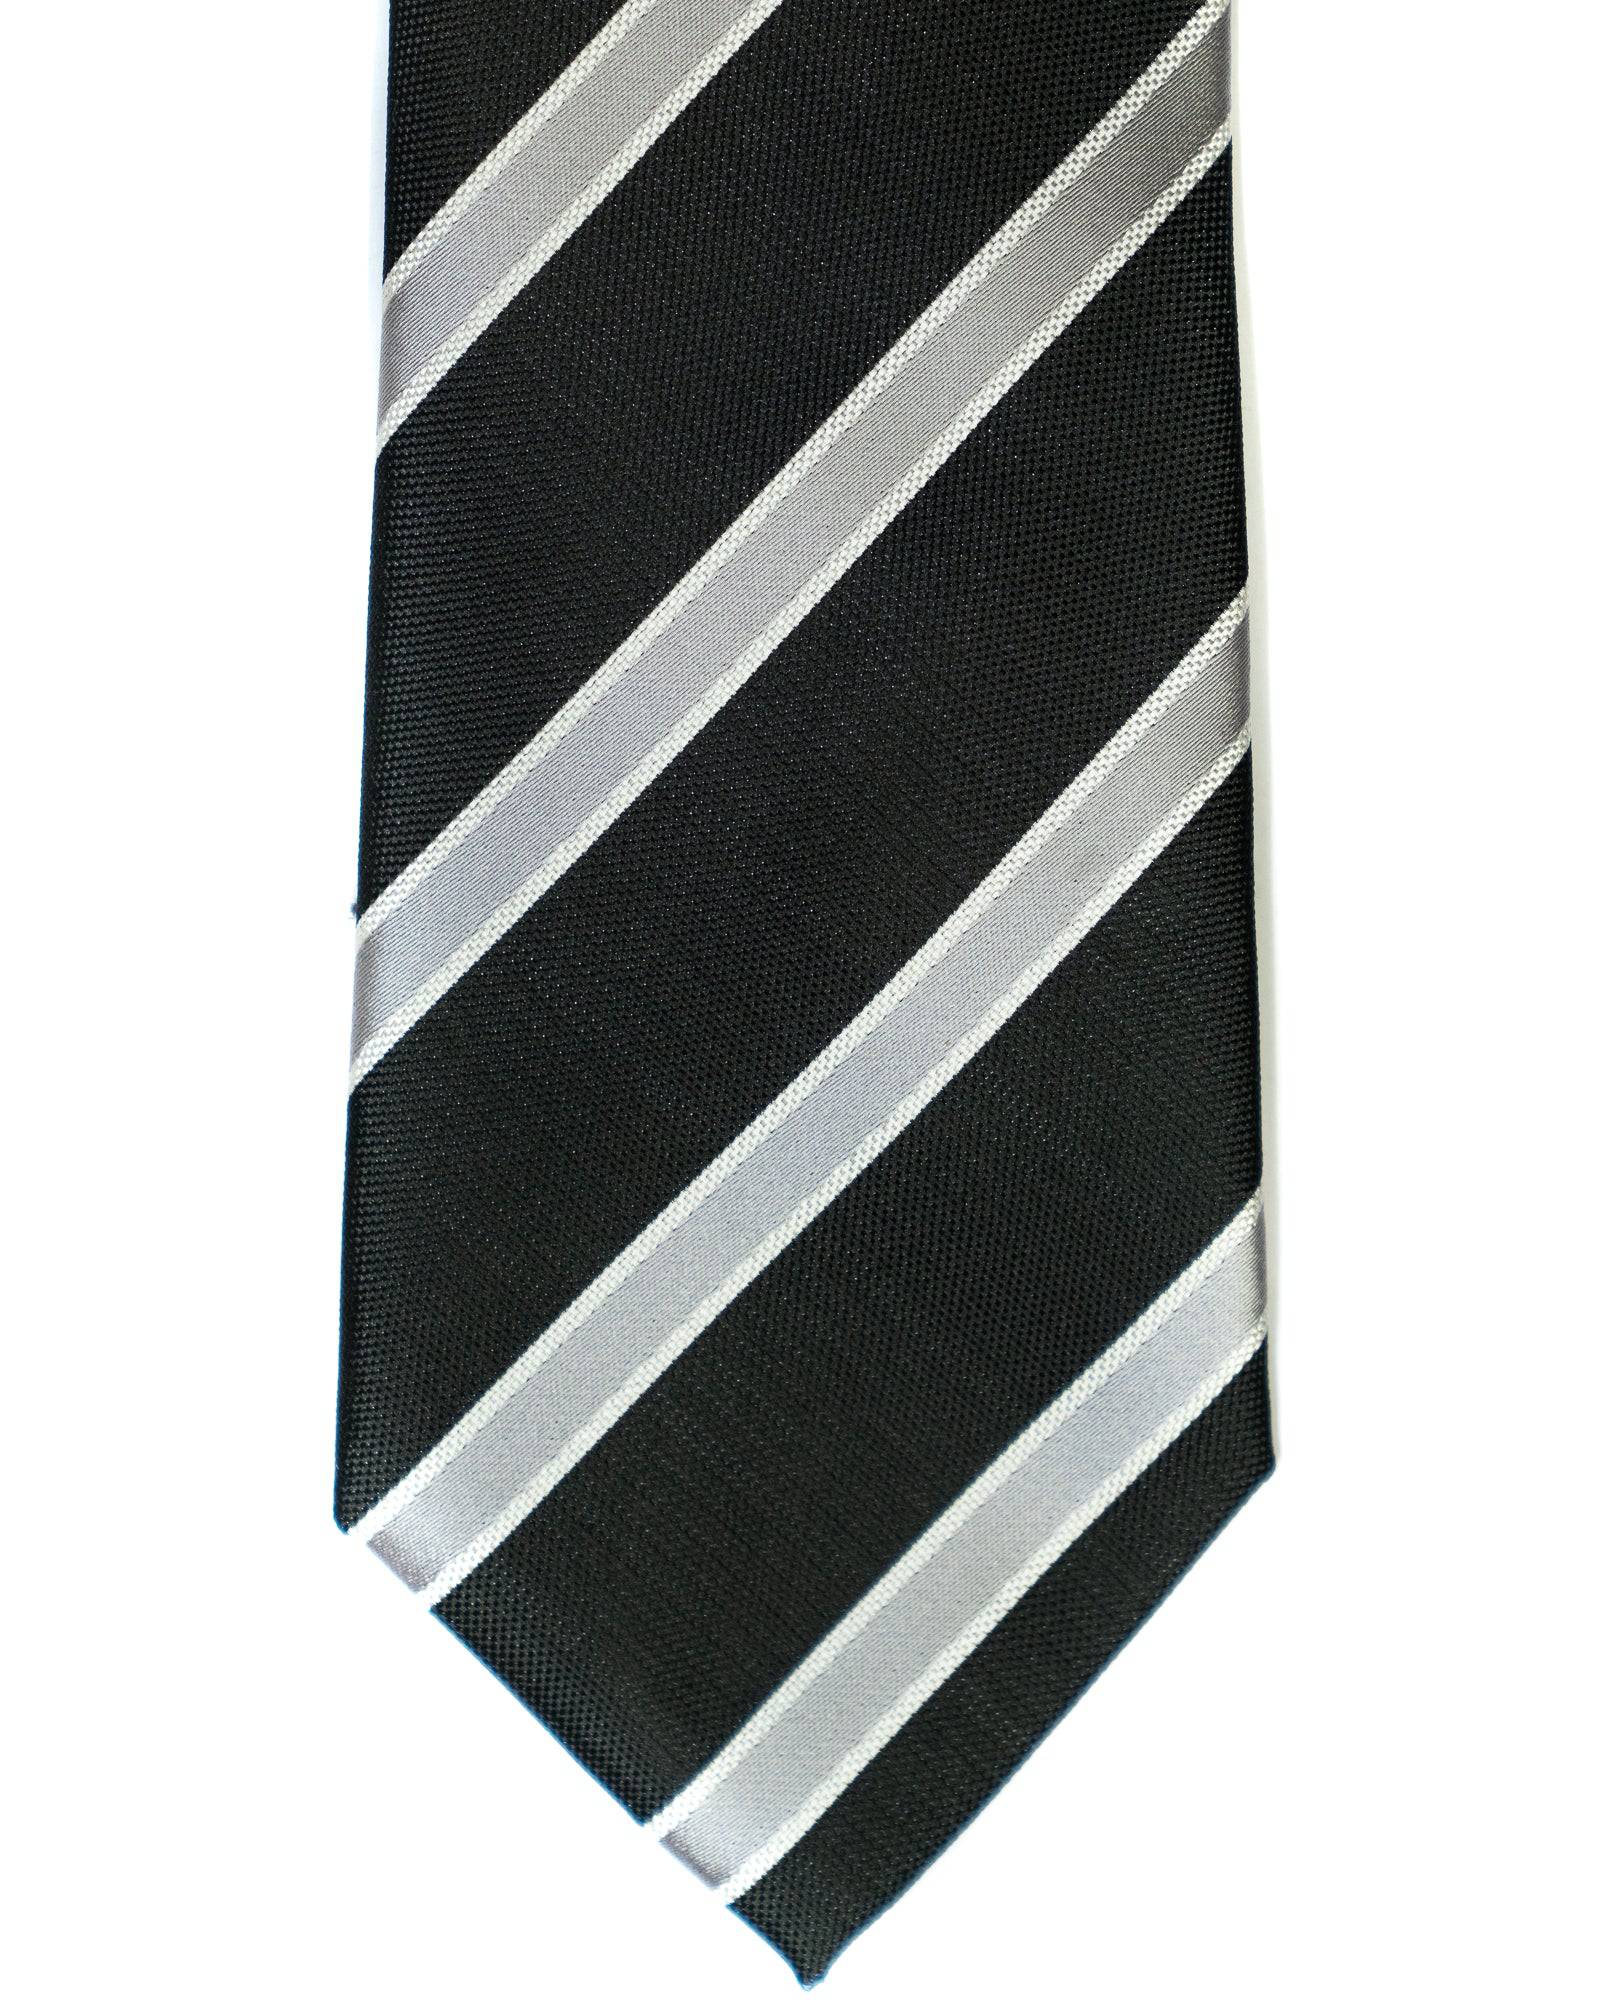 Imani Uomo Stripe Tie in Black with Silver - Rainwater's Men's Clothing and Tuxedo Rental